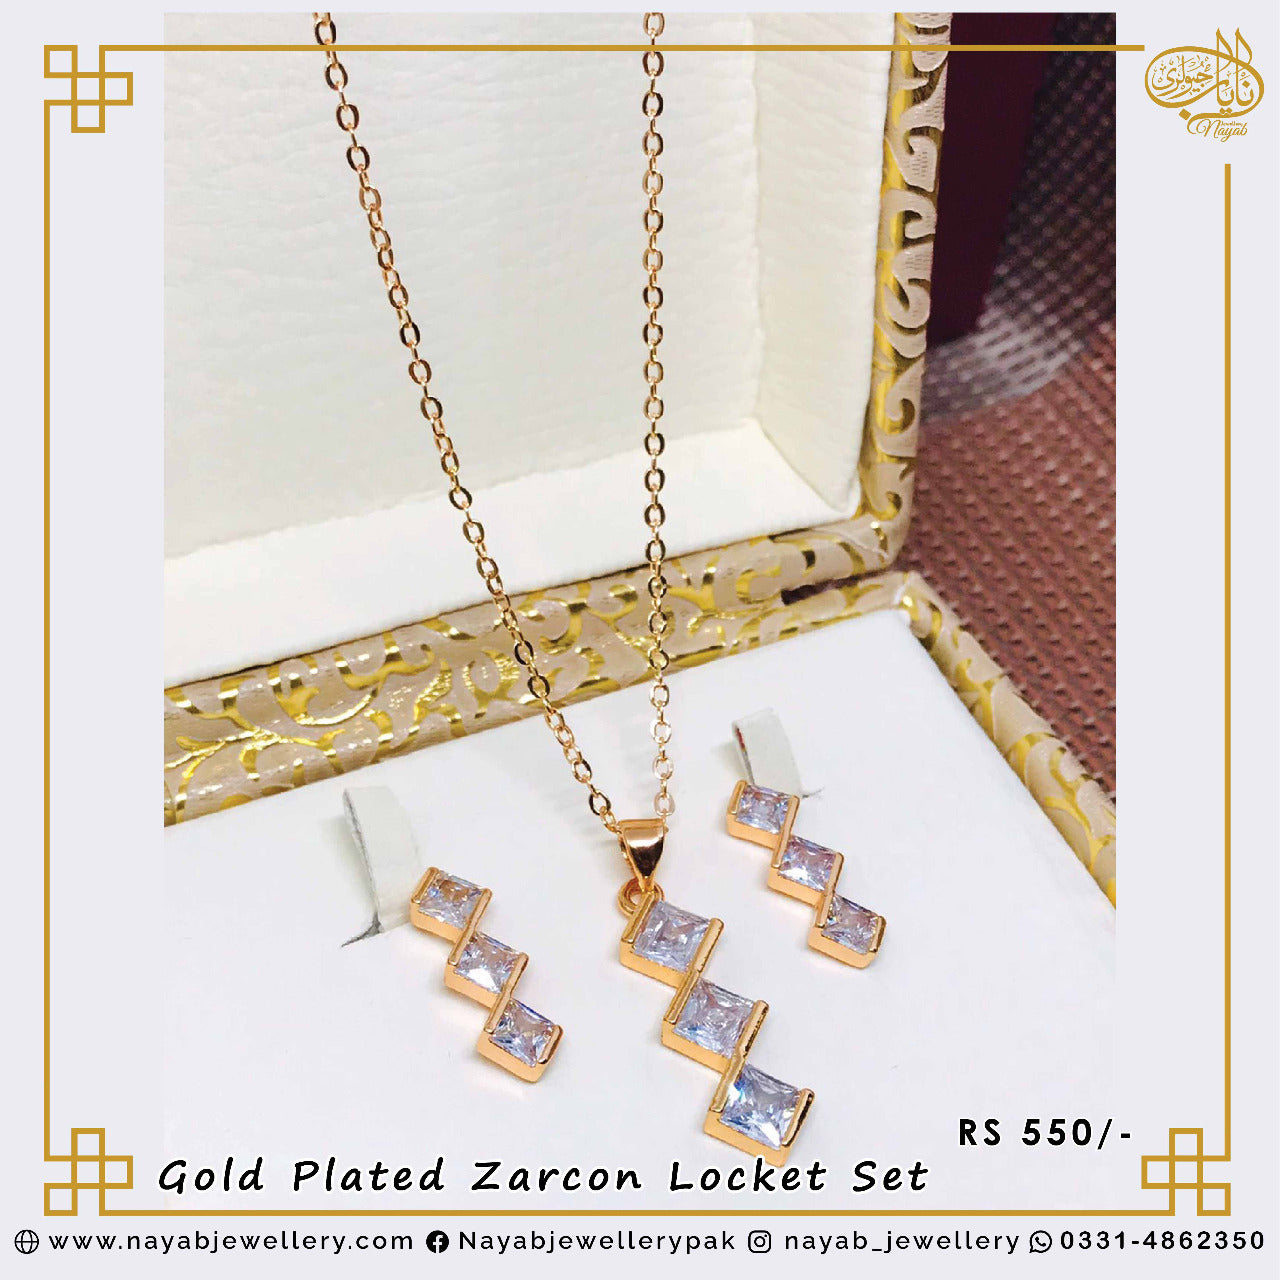 Gold Plated Zarcon Locket Set